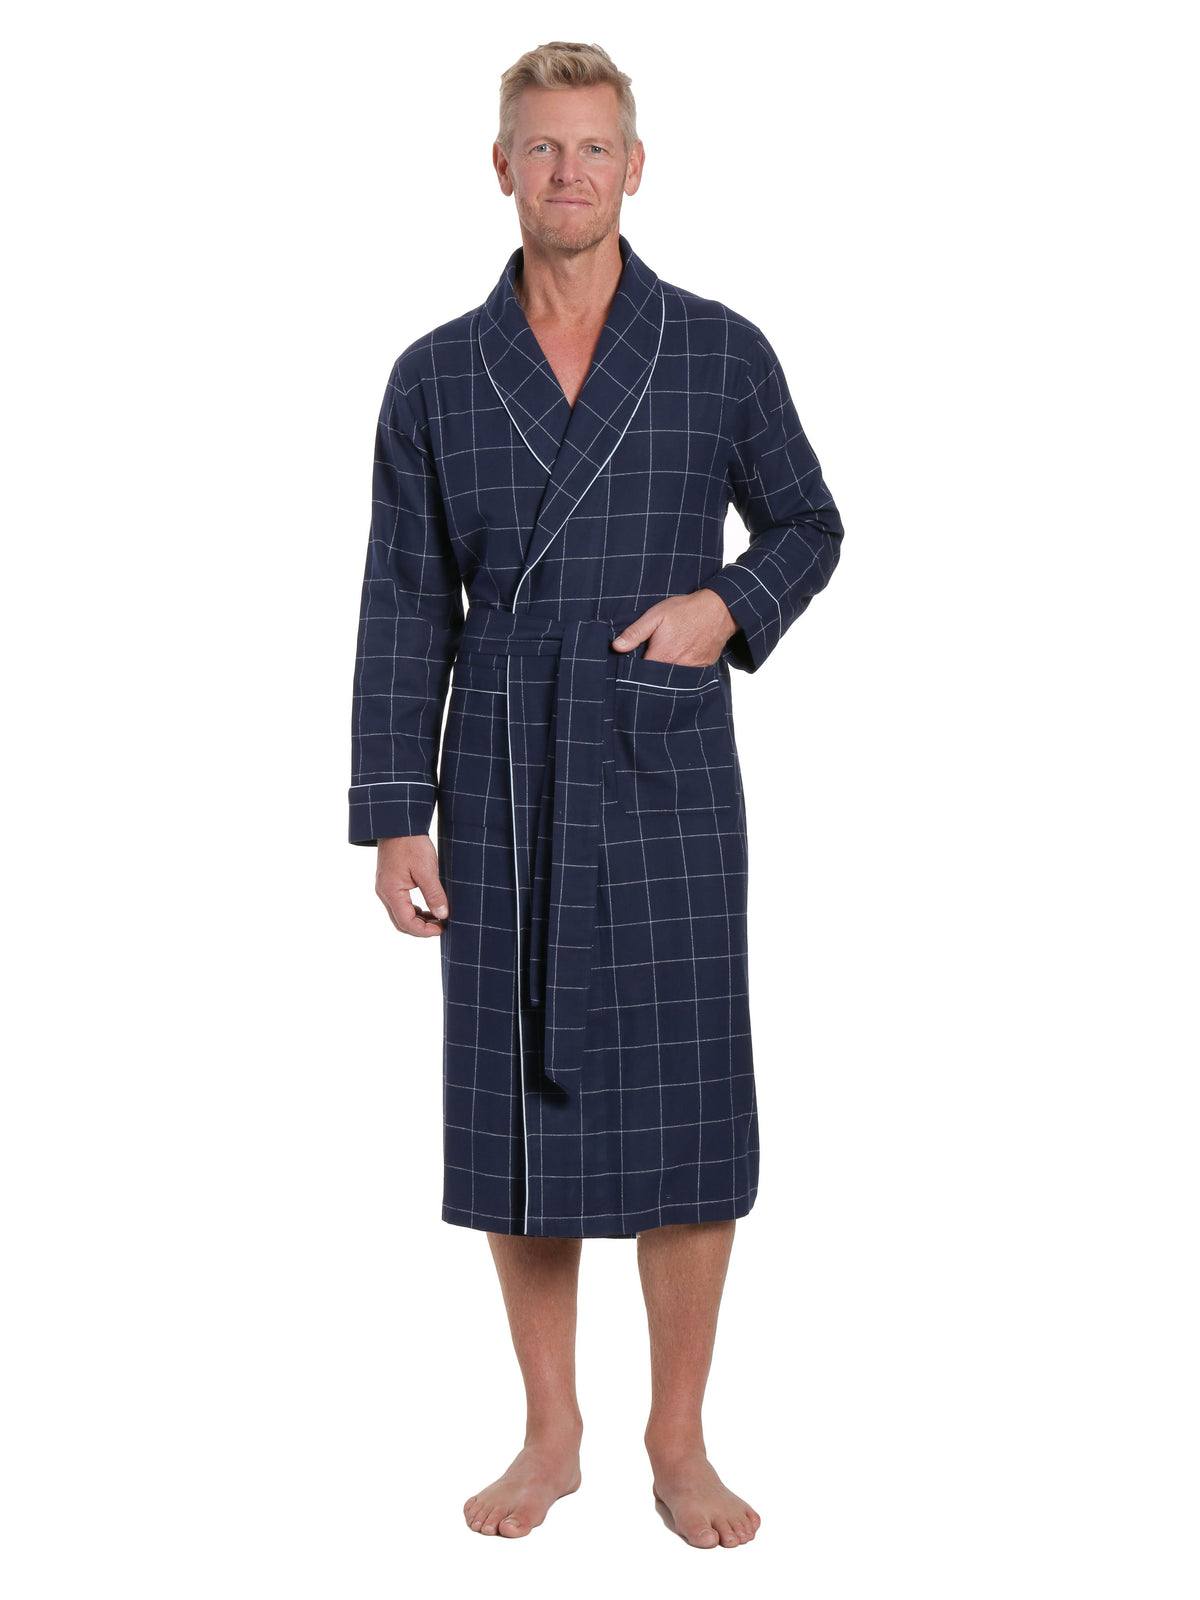 Mens Premium 100% Cotton Flannel Robe - Windowpane Checks - Navy